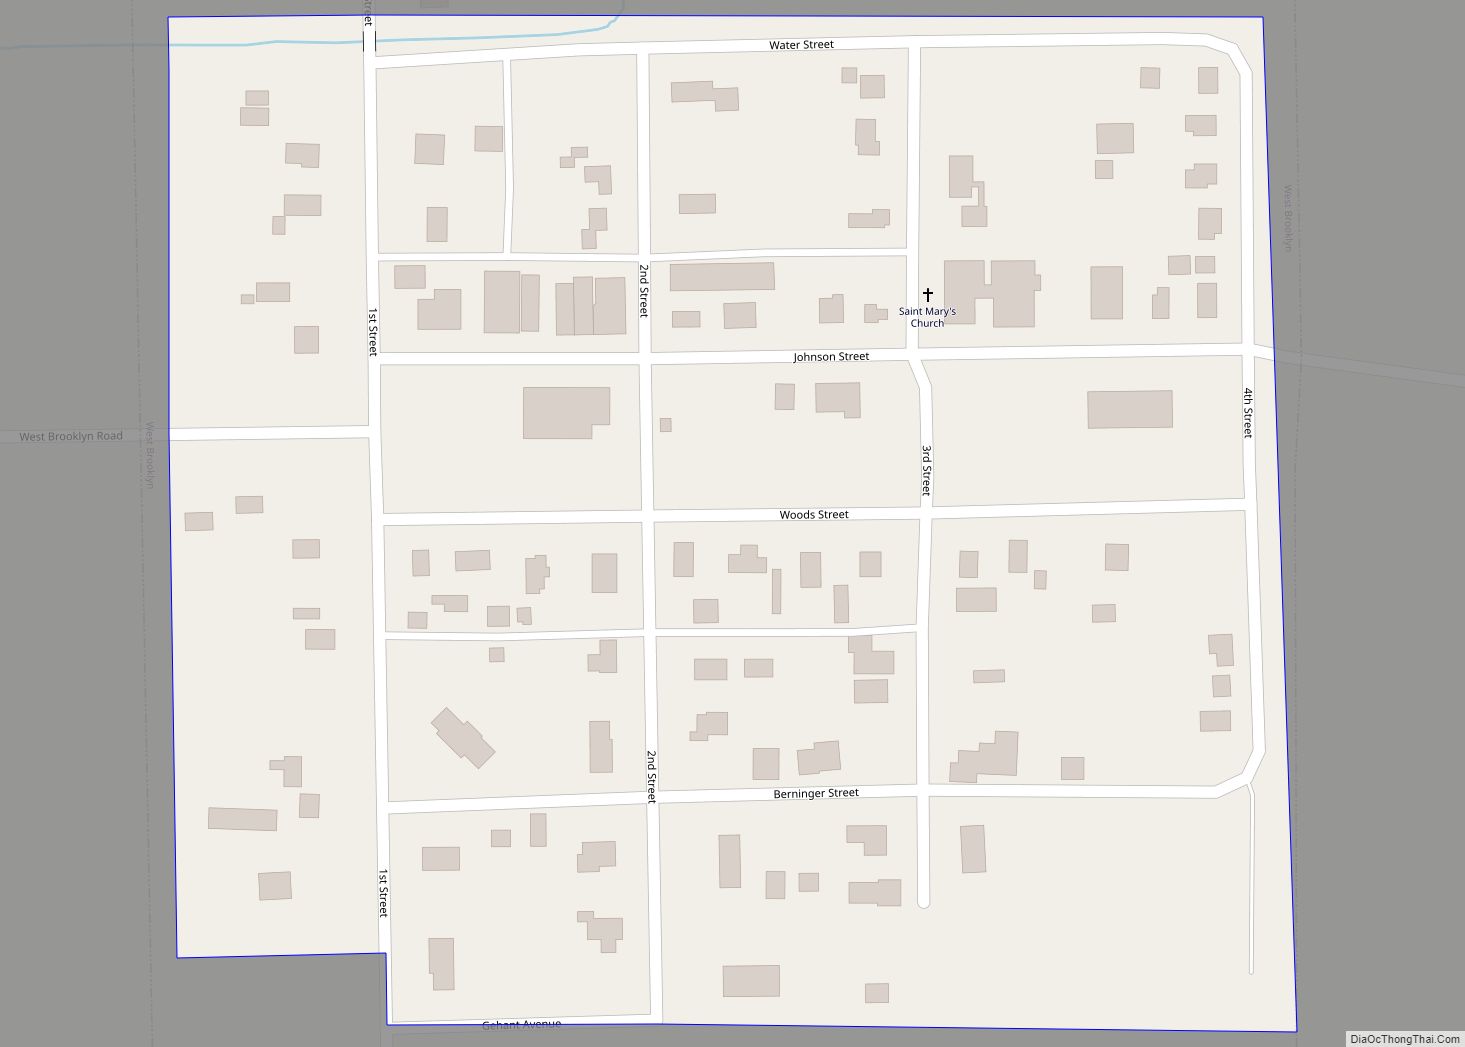 Map of West Brooklyn village